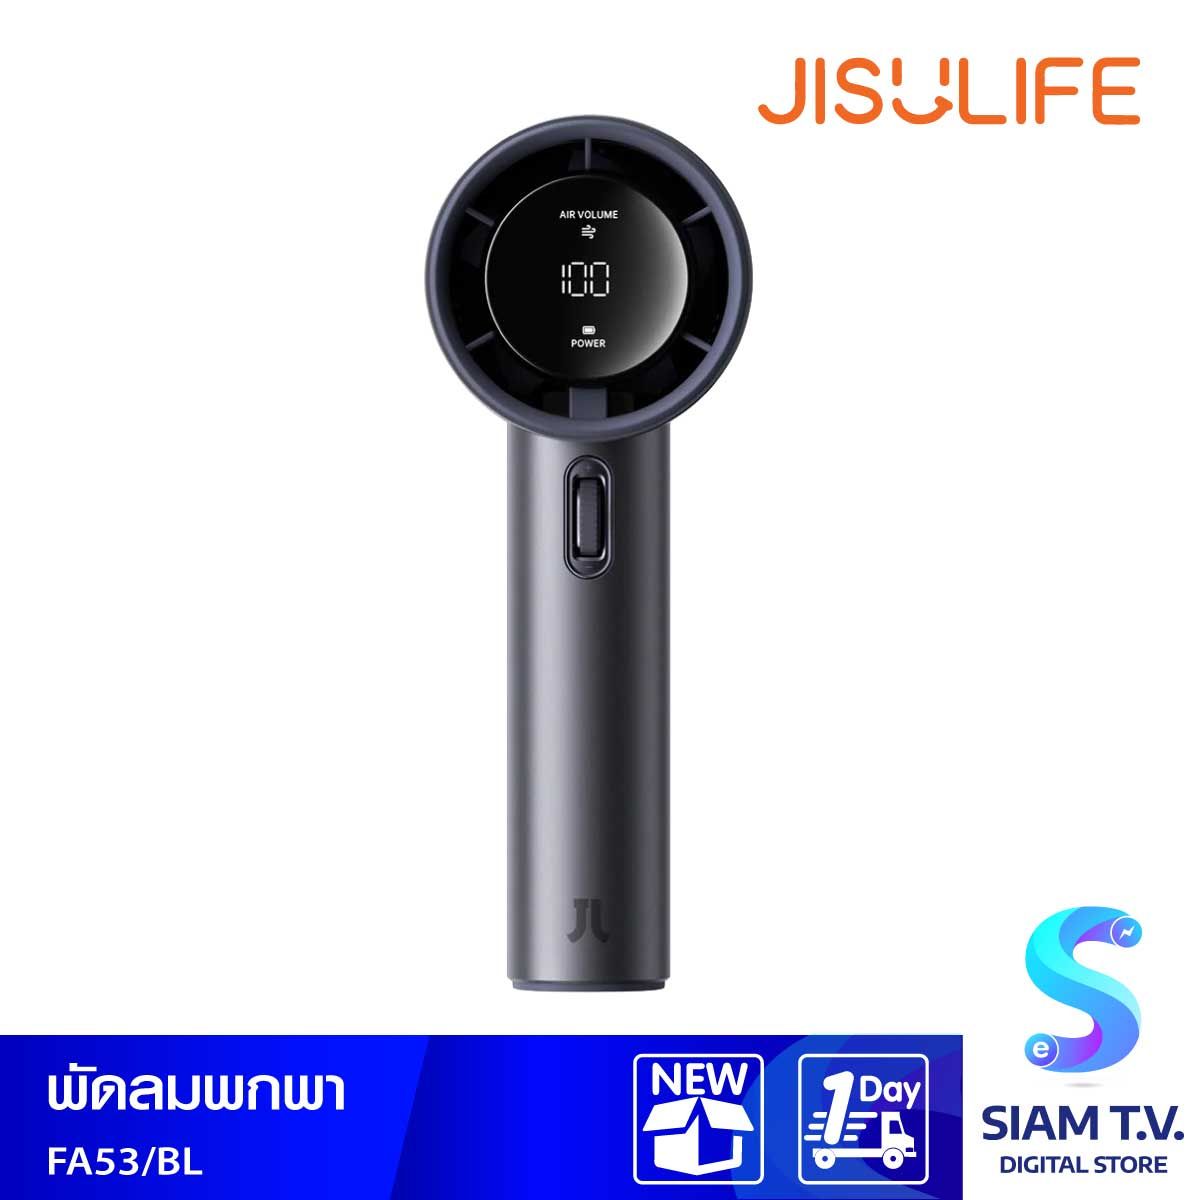 Jisulife FA53 Handheld Fan (ABS) Blue  พัดลมพกพา ให้แรงลมในระดับสูง สามารถปรับความแรงลมได้ 100 ระดับ